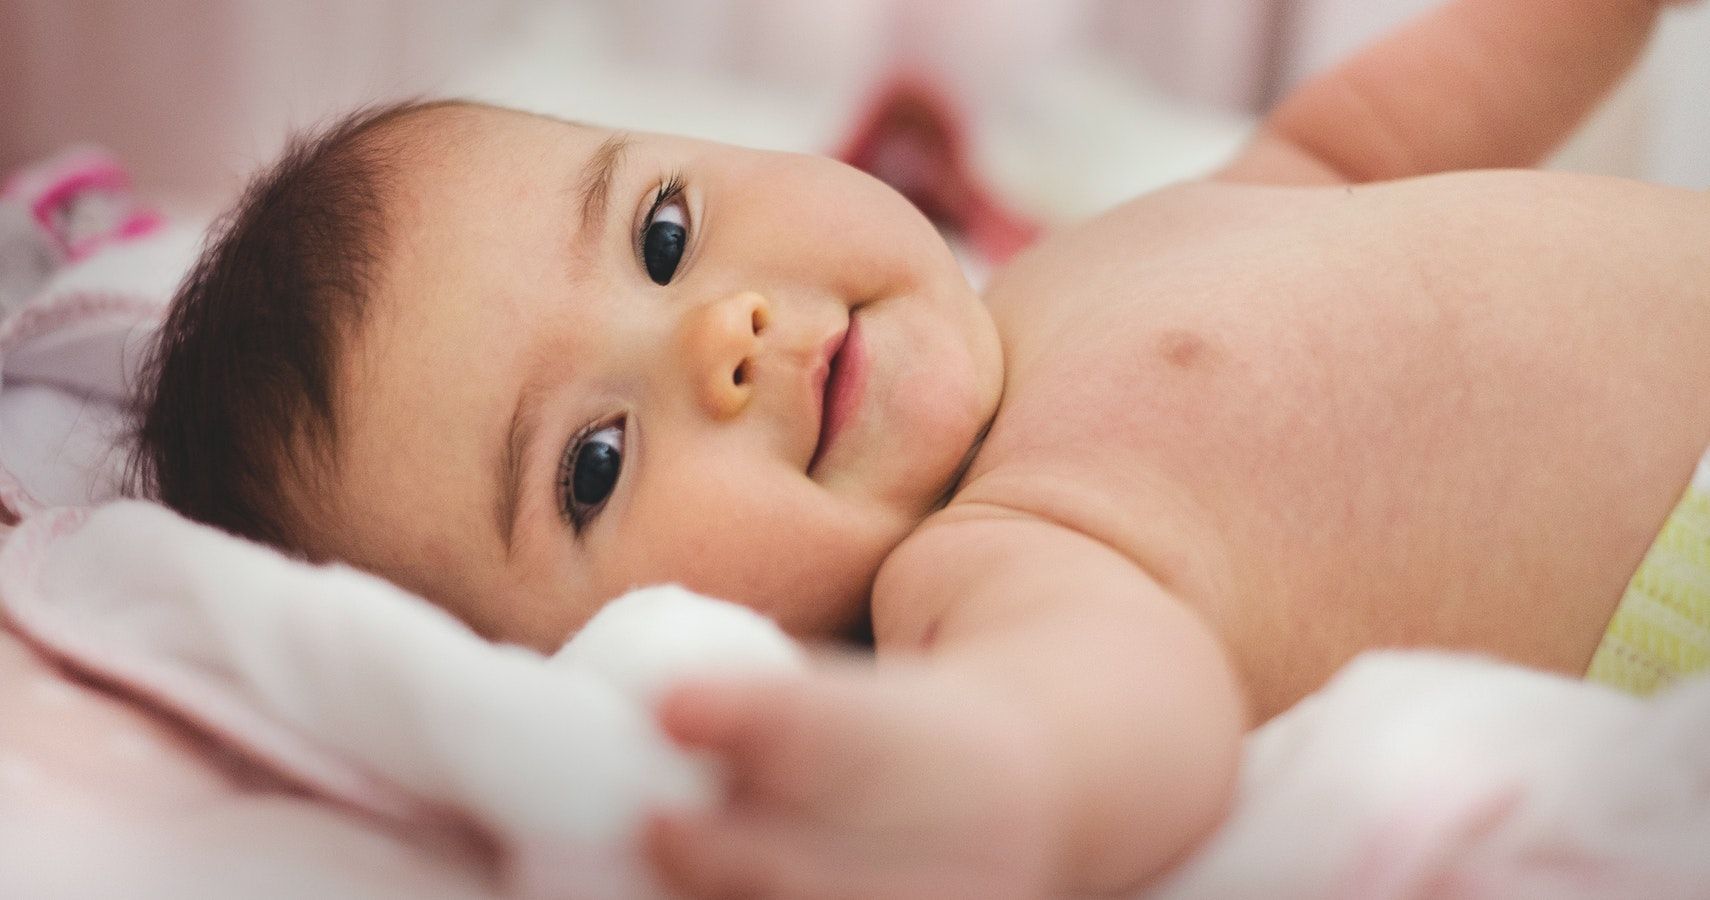 Young Babies More Visually Aware Than Adults